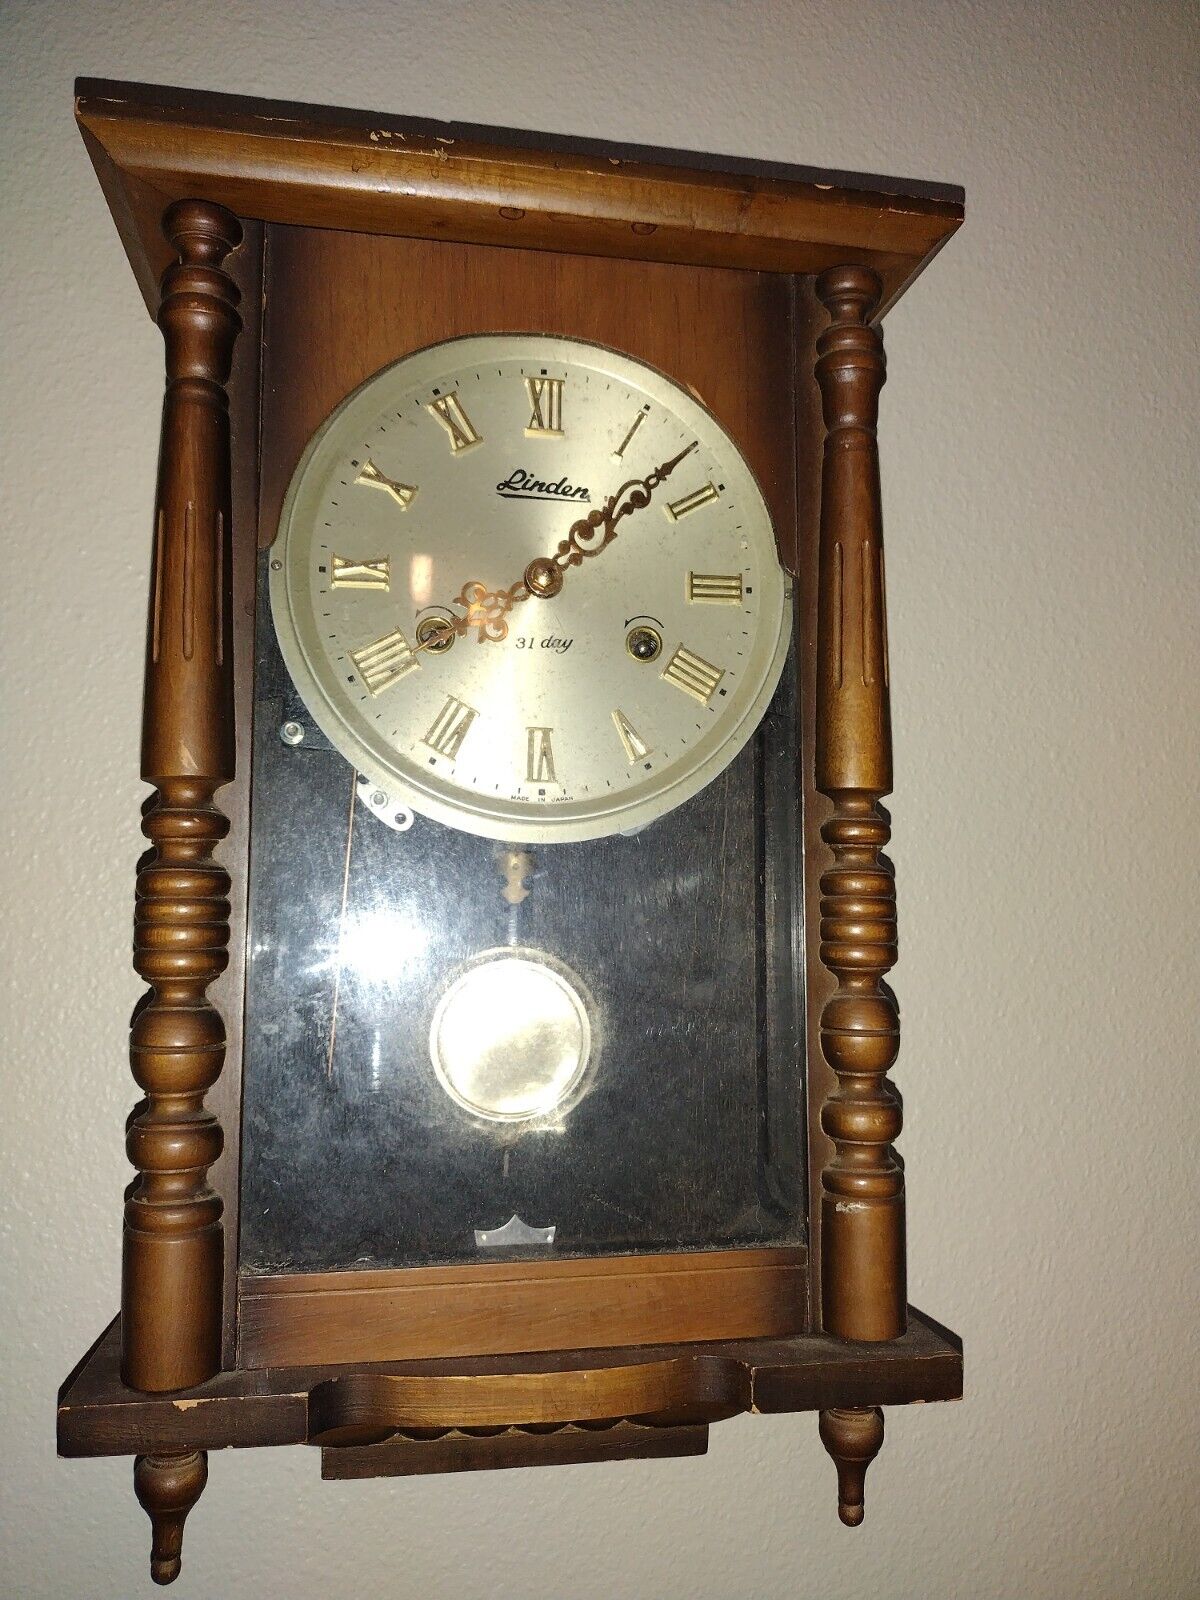 Vintage Linden Chime Wall Clock  31-Day Mechanical Key-wind - JAPAN